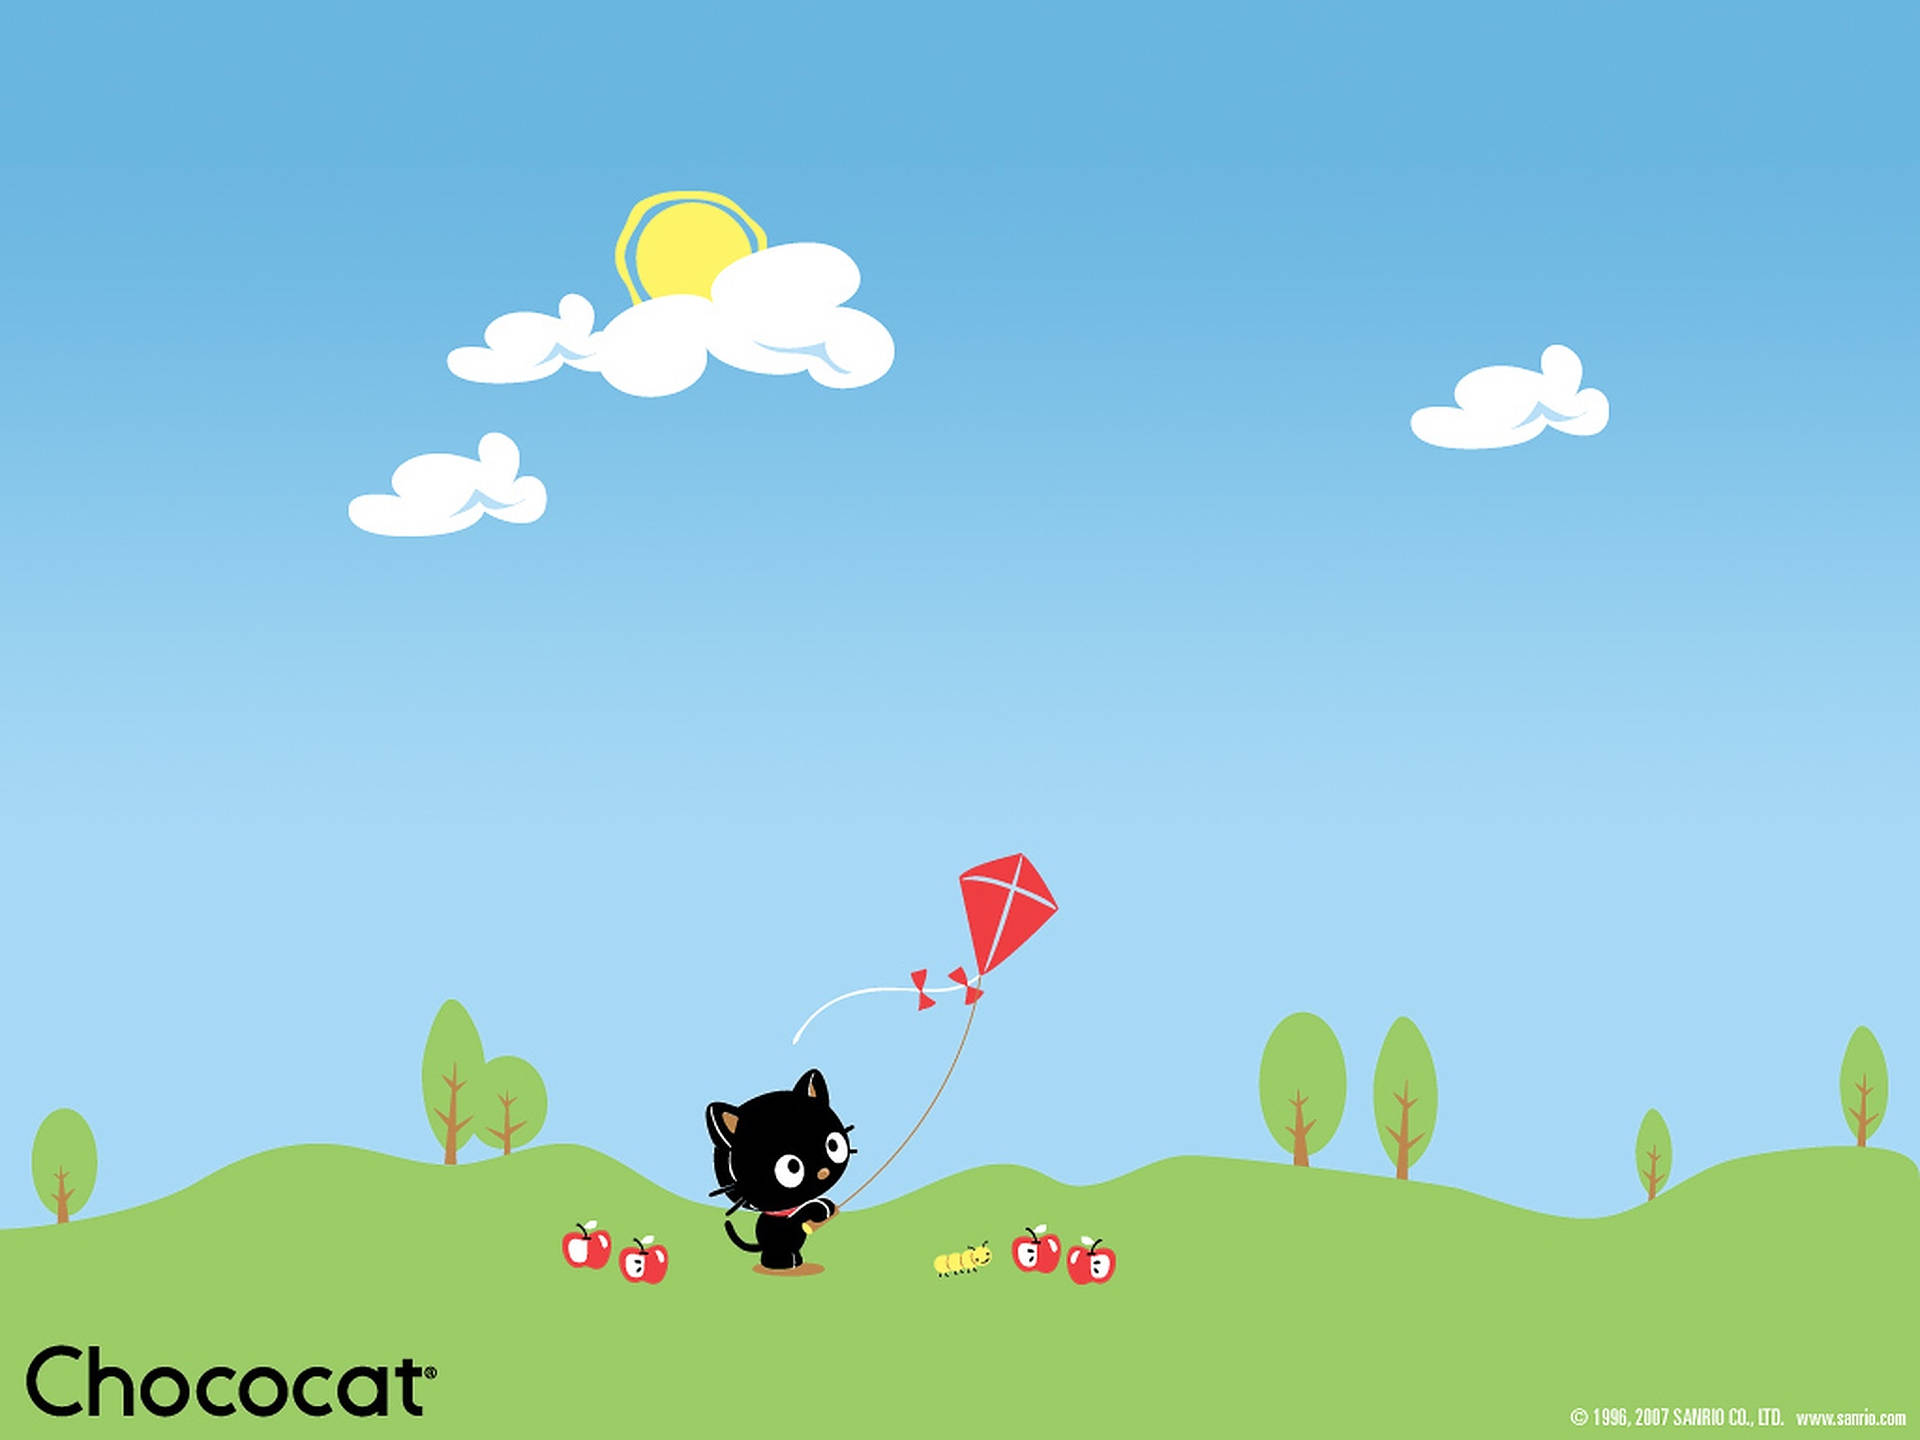 Chococat Flying A Kite